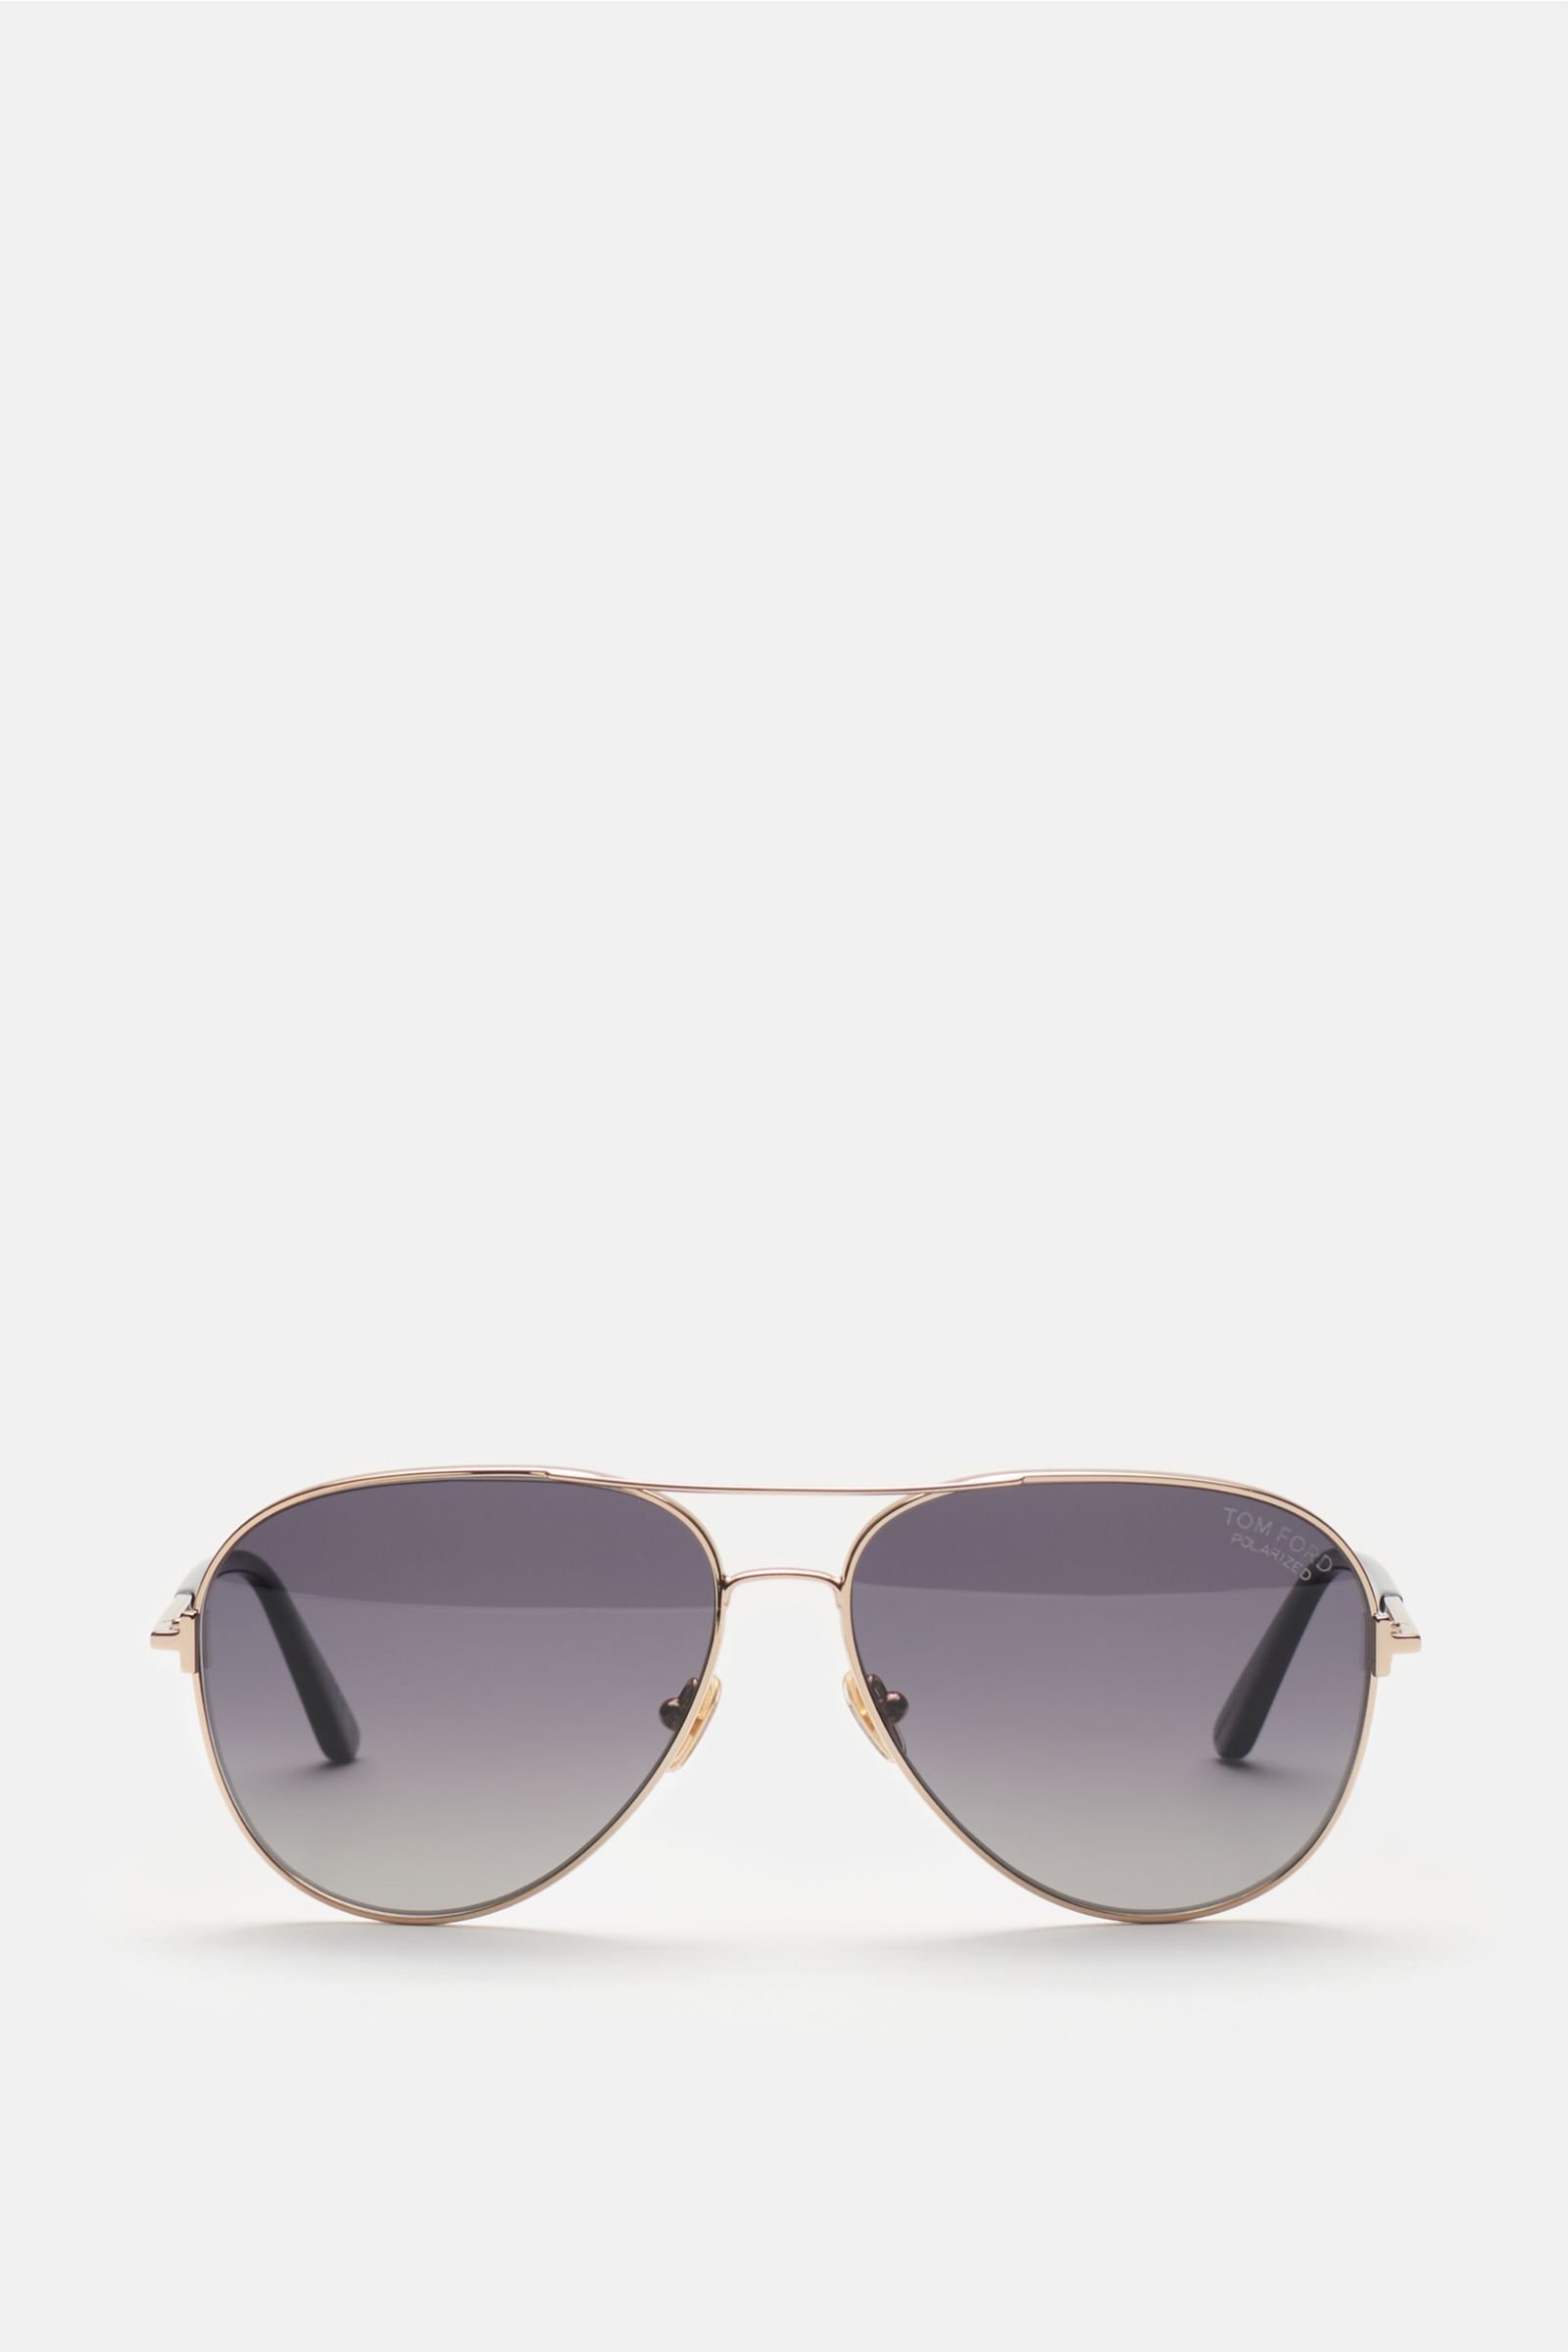 Sonnenbrille 'Clark' gold/grau